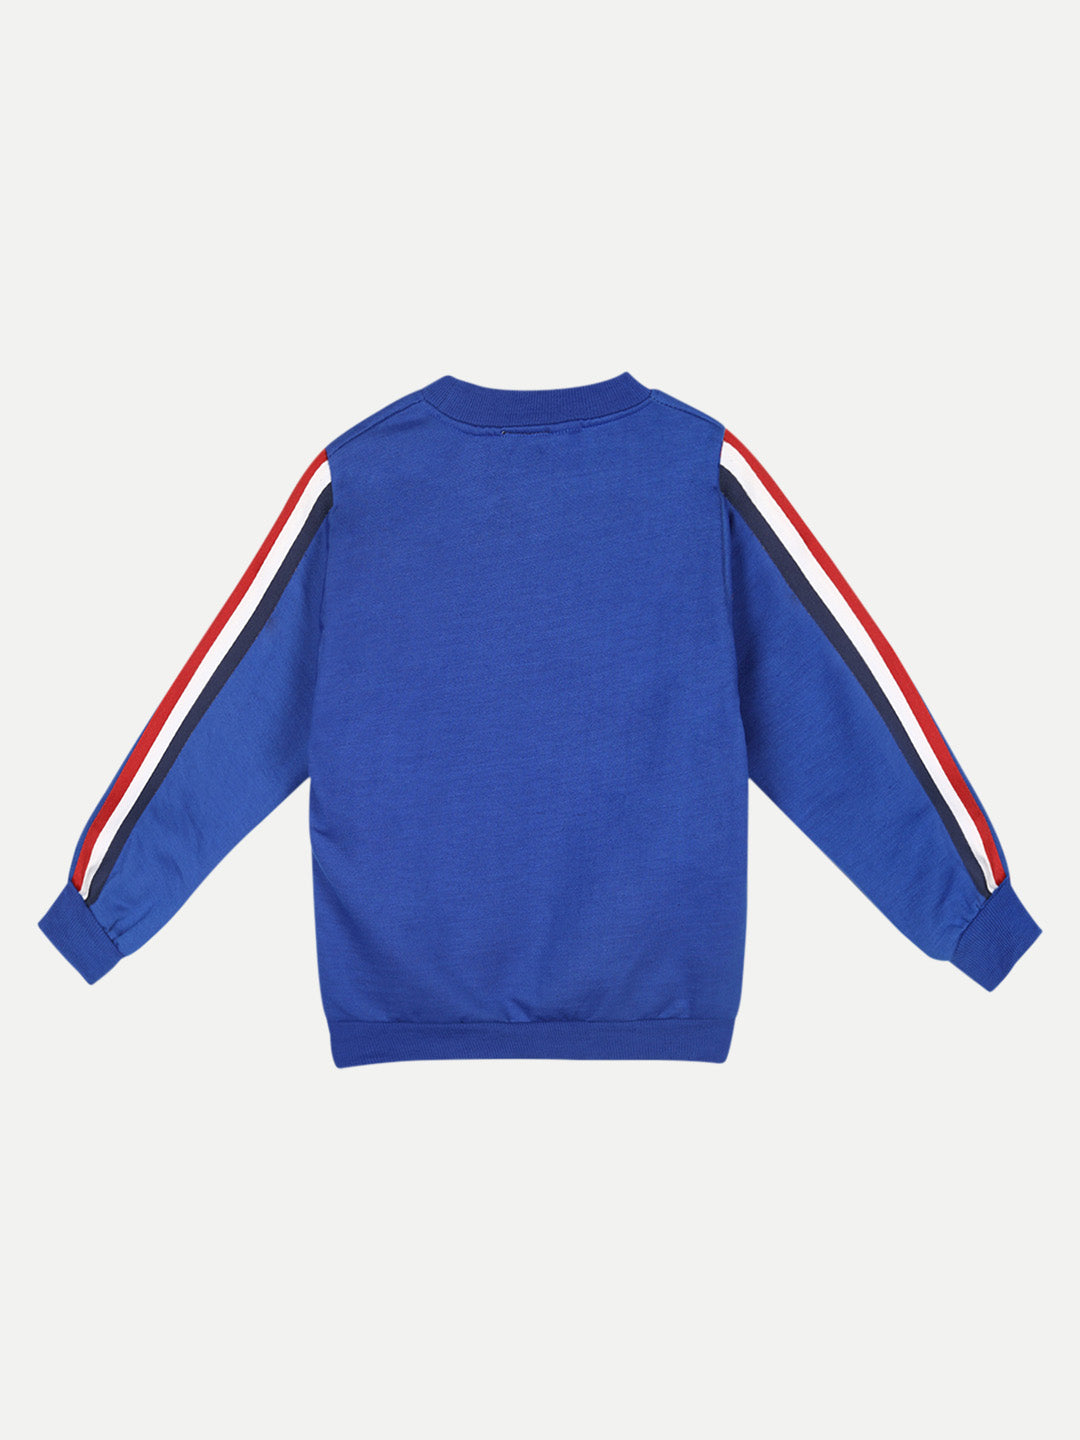 Cutiekins Pack of 2 Sweatshirt-Royal Blue & Peach